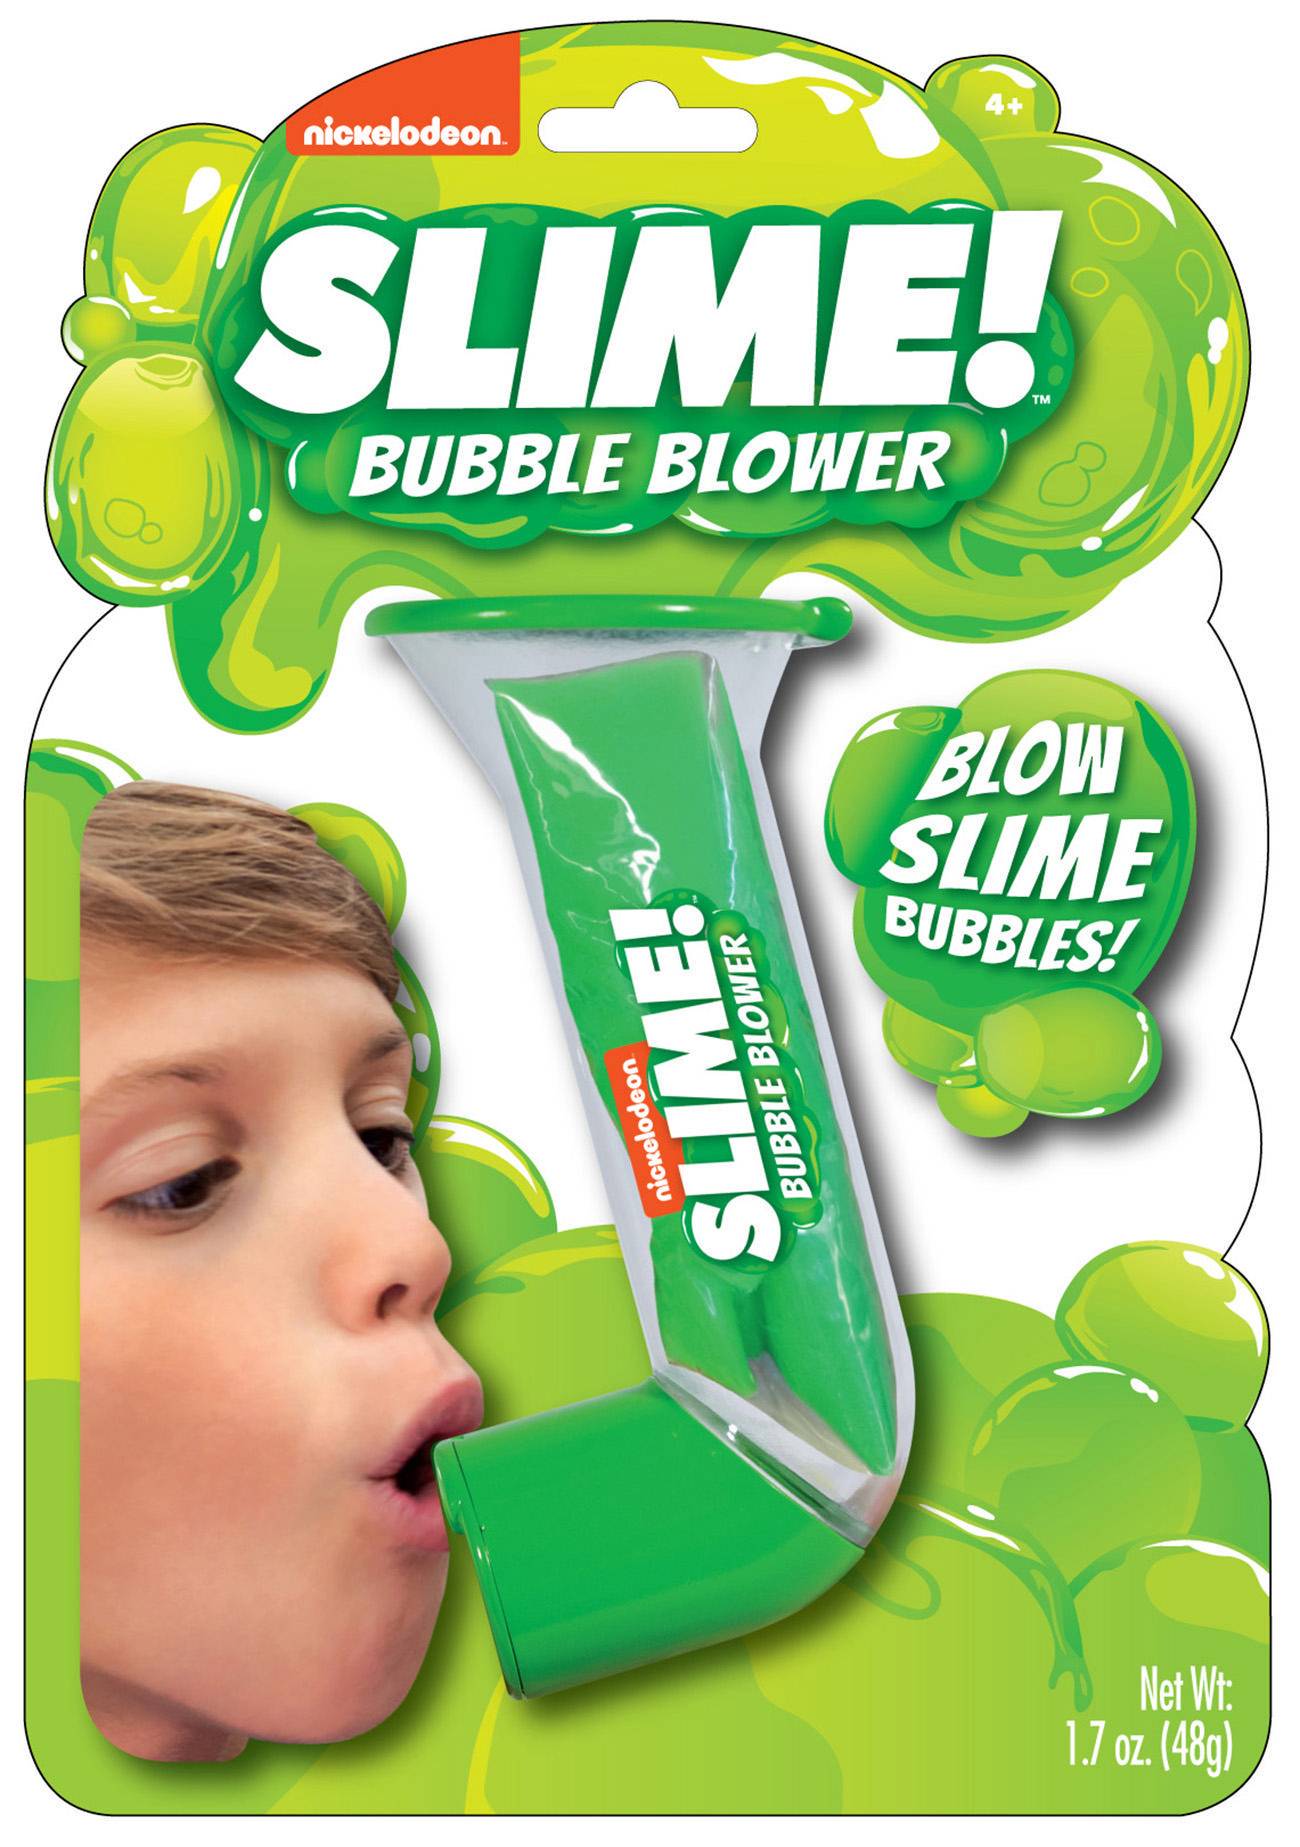 Слайм пузырь. Слаим пузырь. Slime Bubble. TS Buzz Bubble Blower. Slime Bubble Match Puzzle.